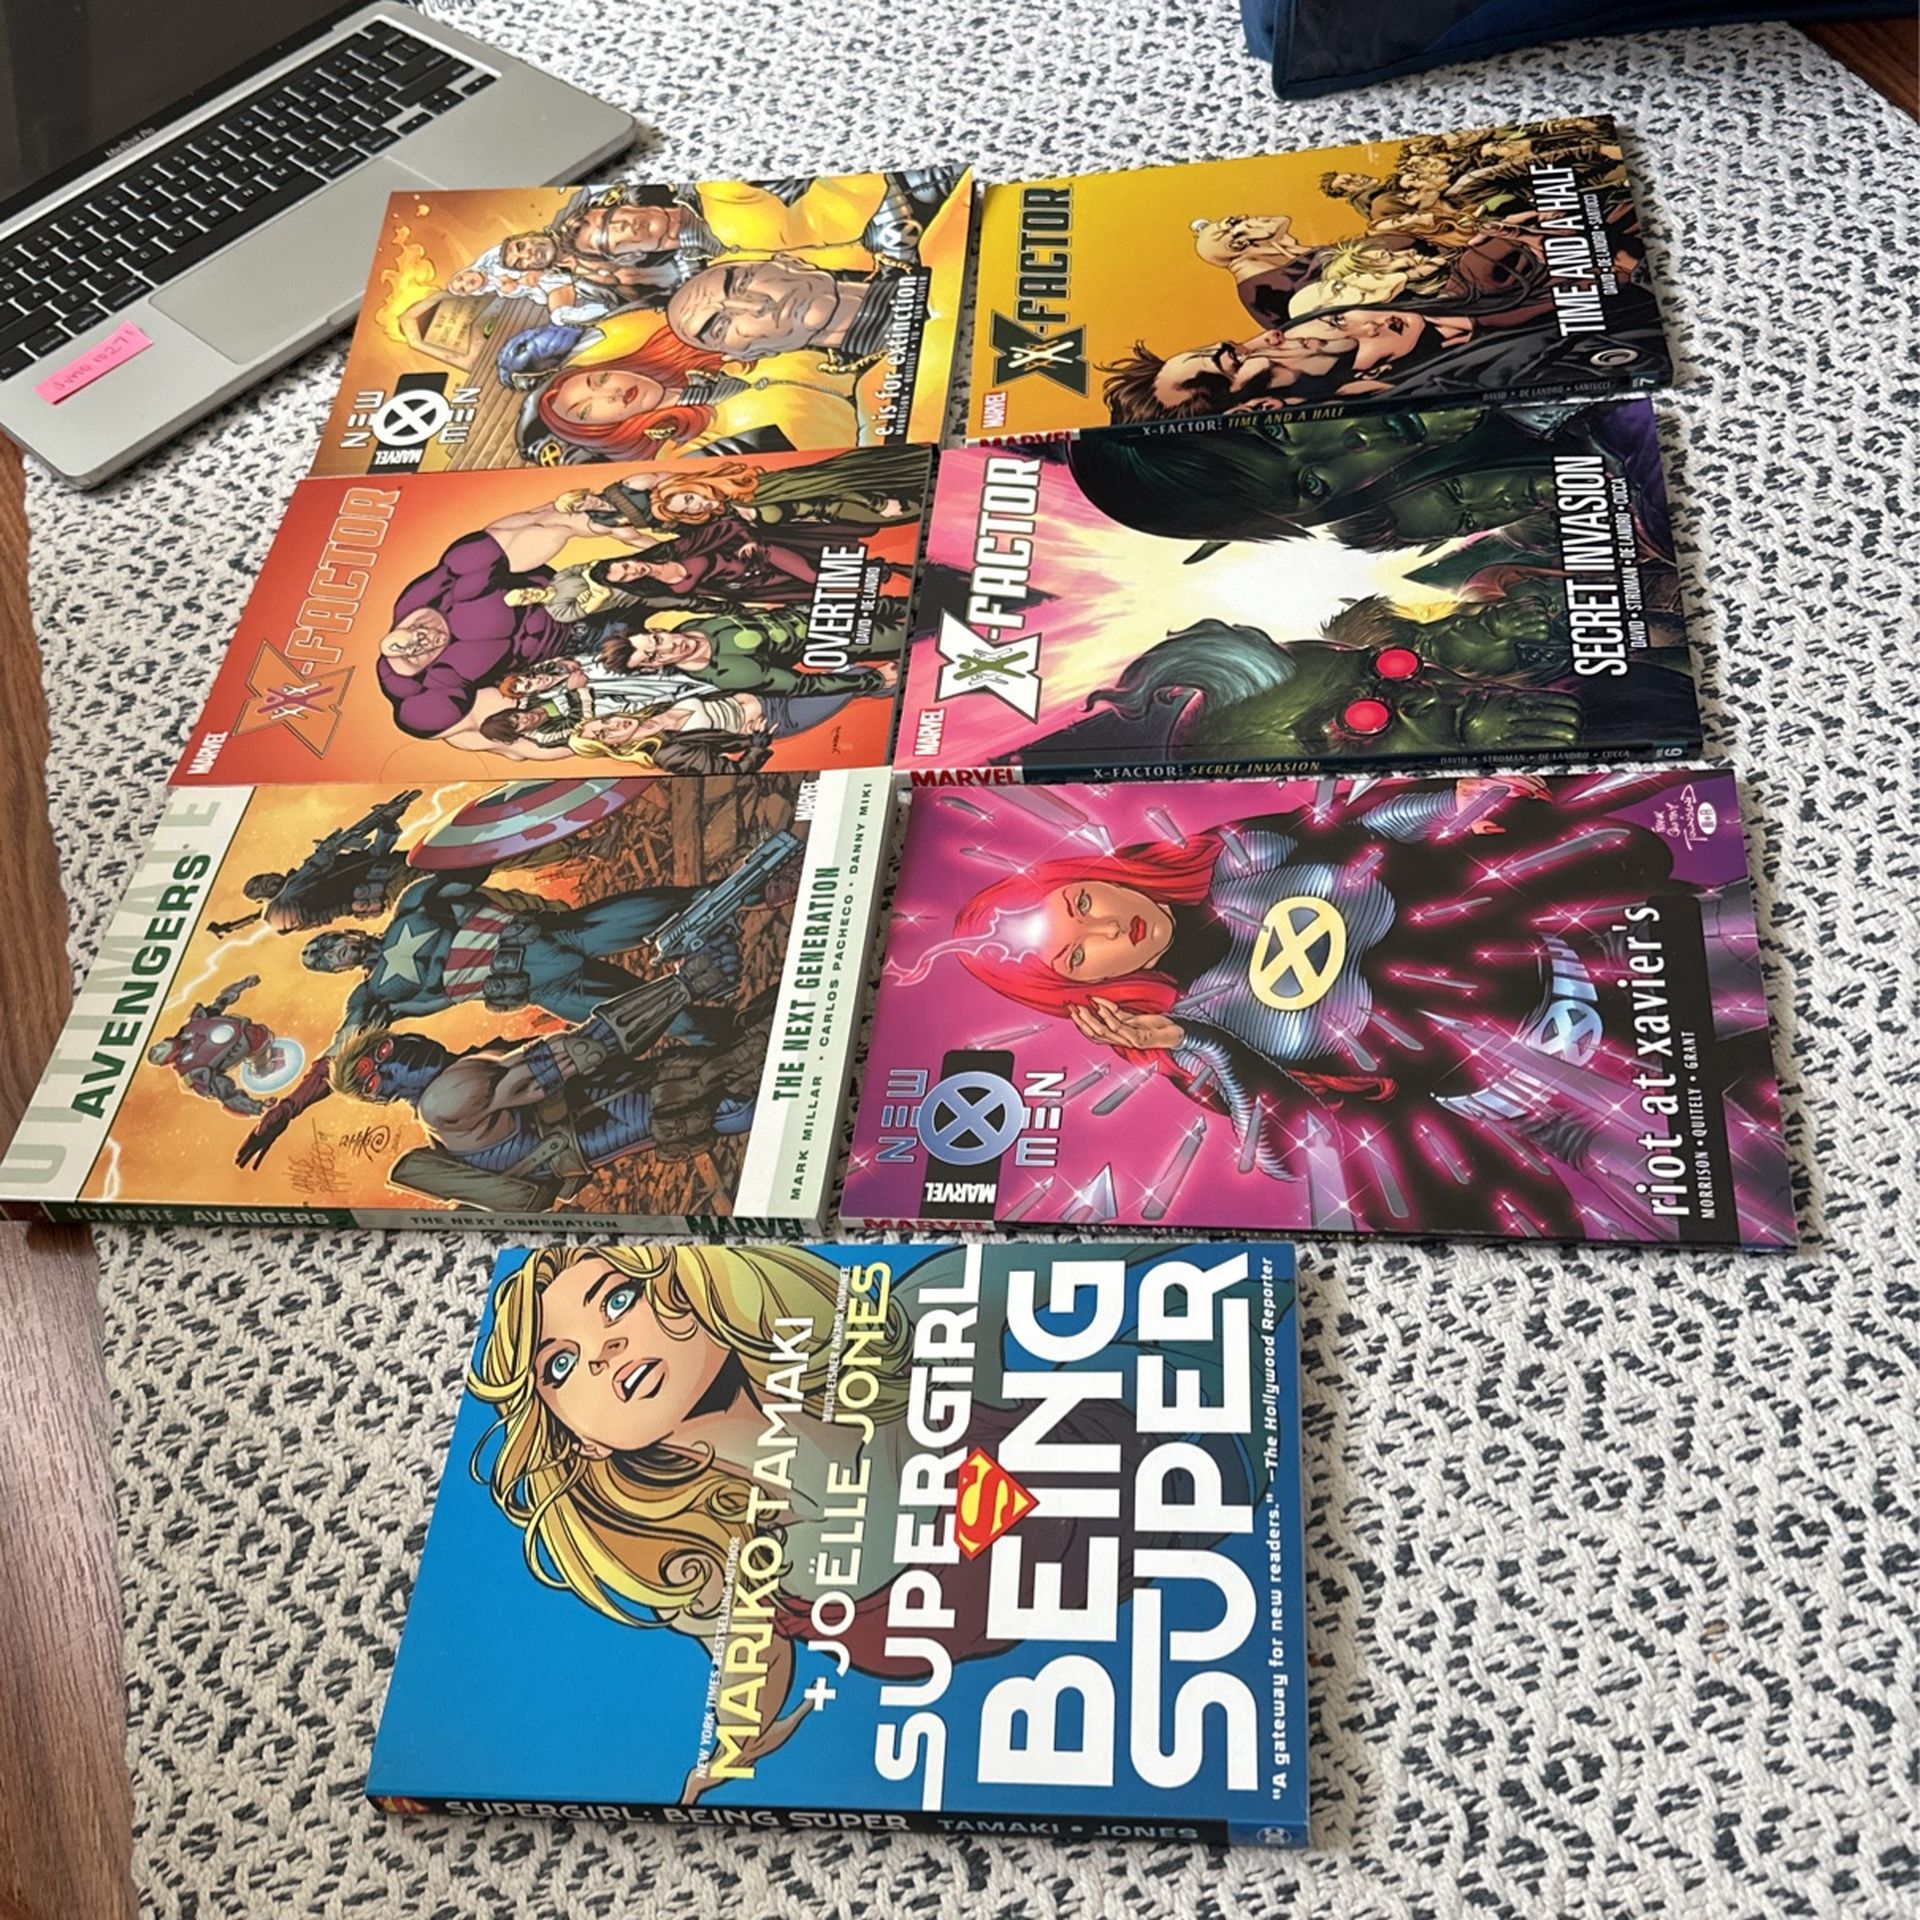 Marvel Books/comics